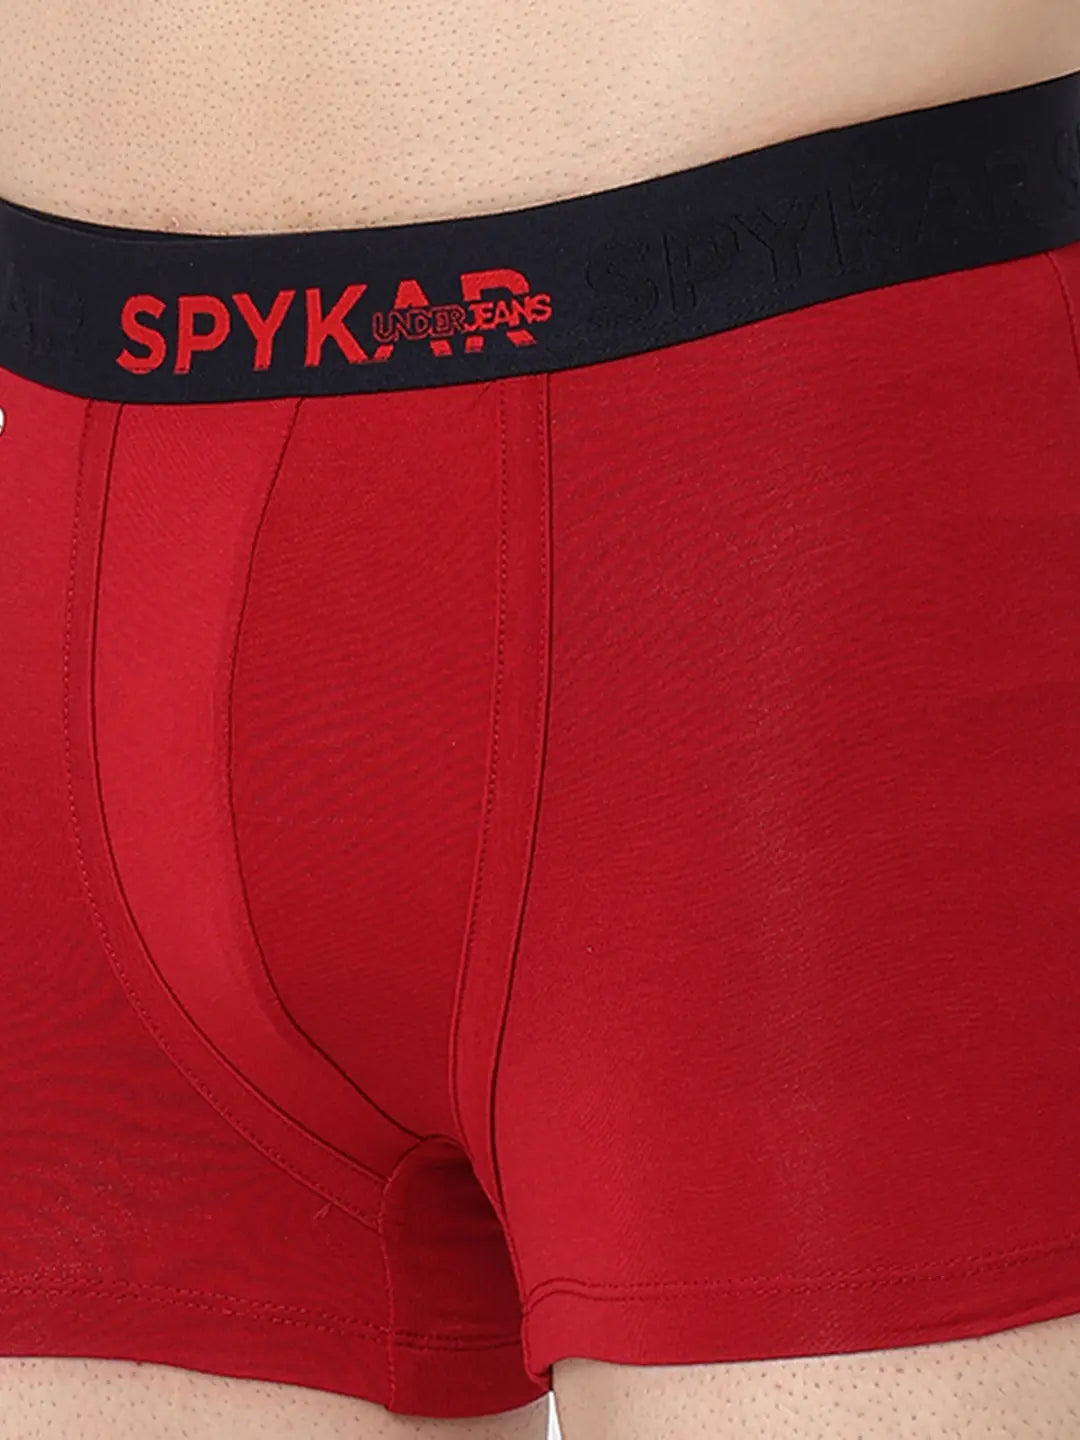 Underjeans by Spykar Men Premium Grey & Maroon Cotton Blend Regular Fit Trunk - Pack Of 2